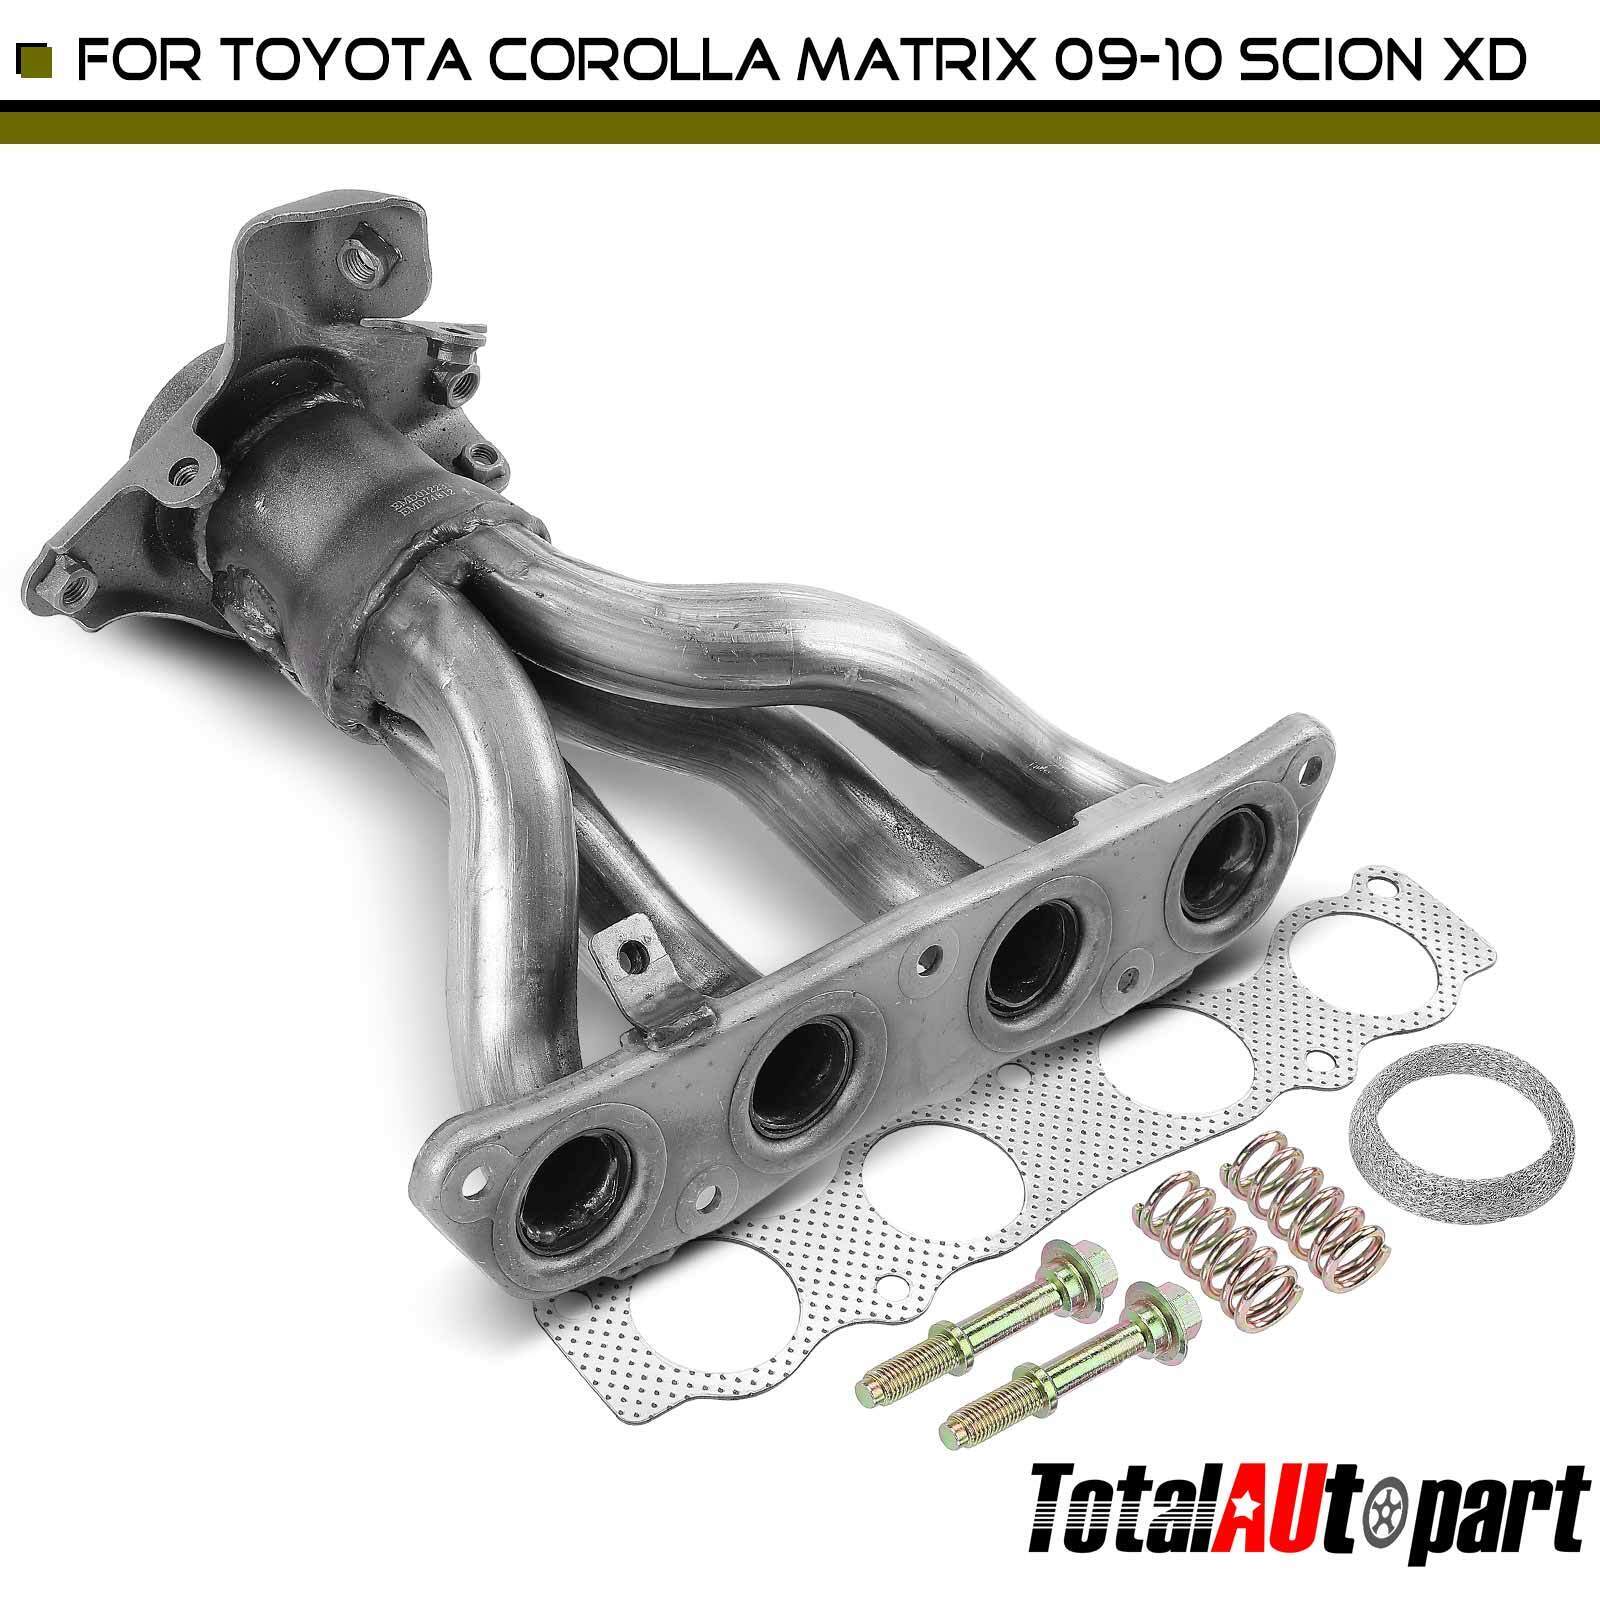 Exhaust Manifold w/ Gasket Kit for Toyota Corolla Matrix 2009-2010 Scion xD 1.8L